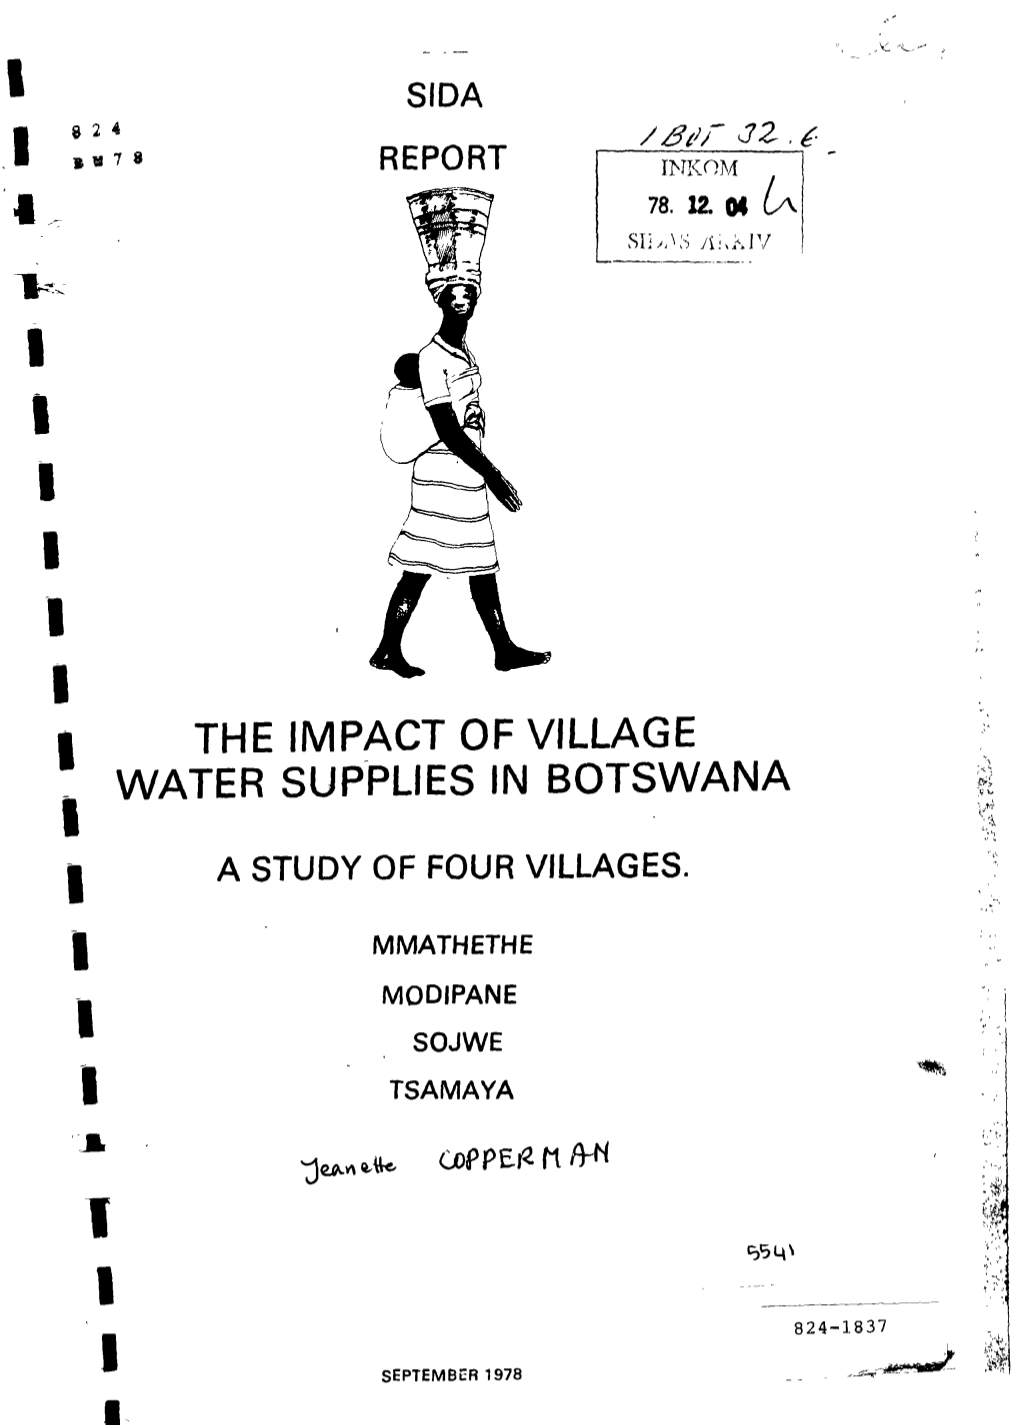 1 Sida 1 the Impact of Village Water Supplies in Botswana 1